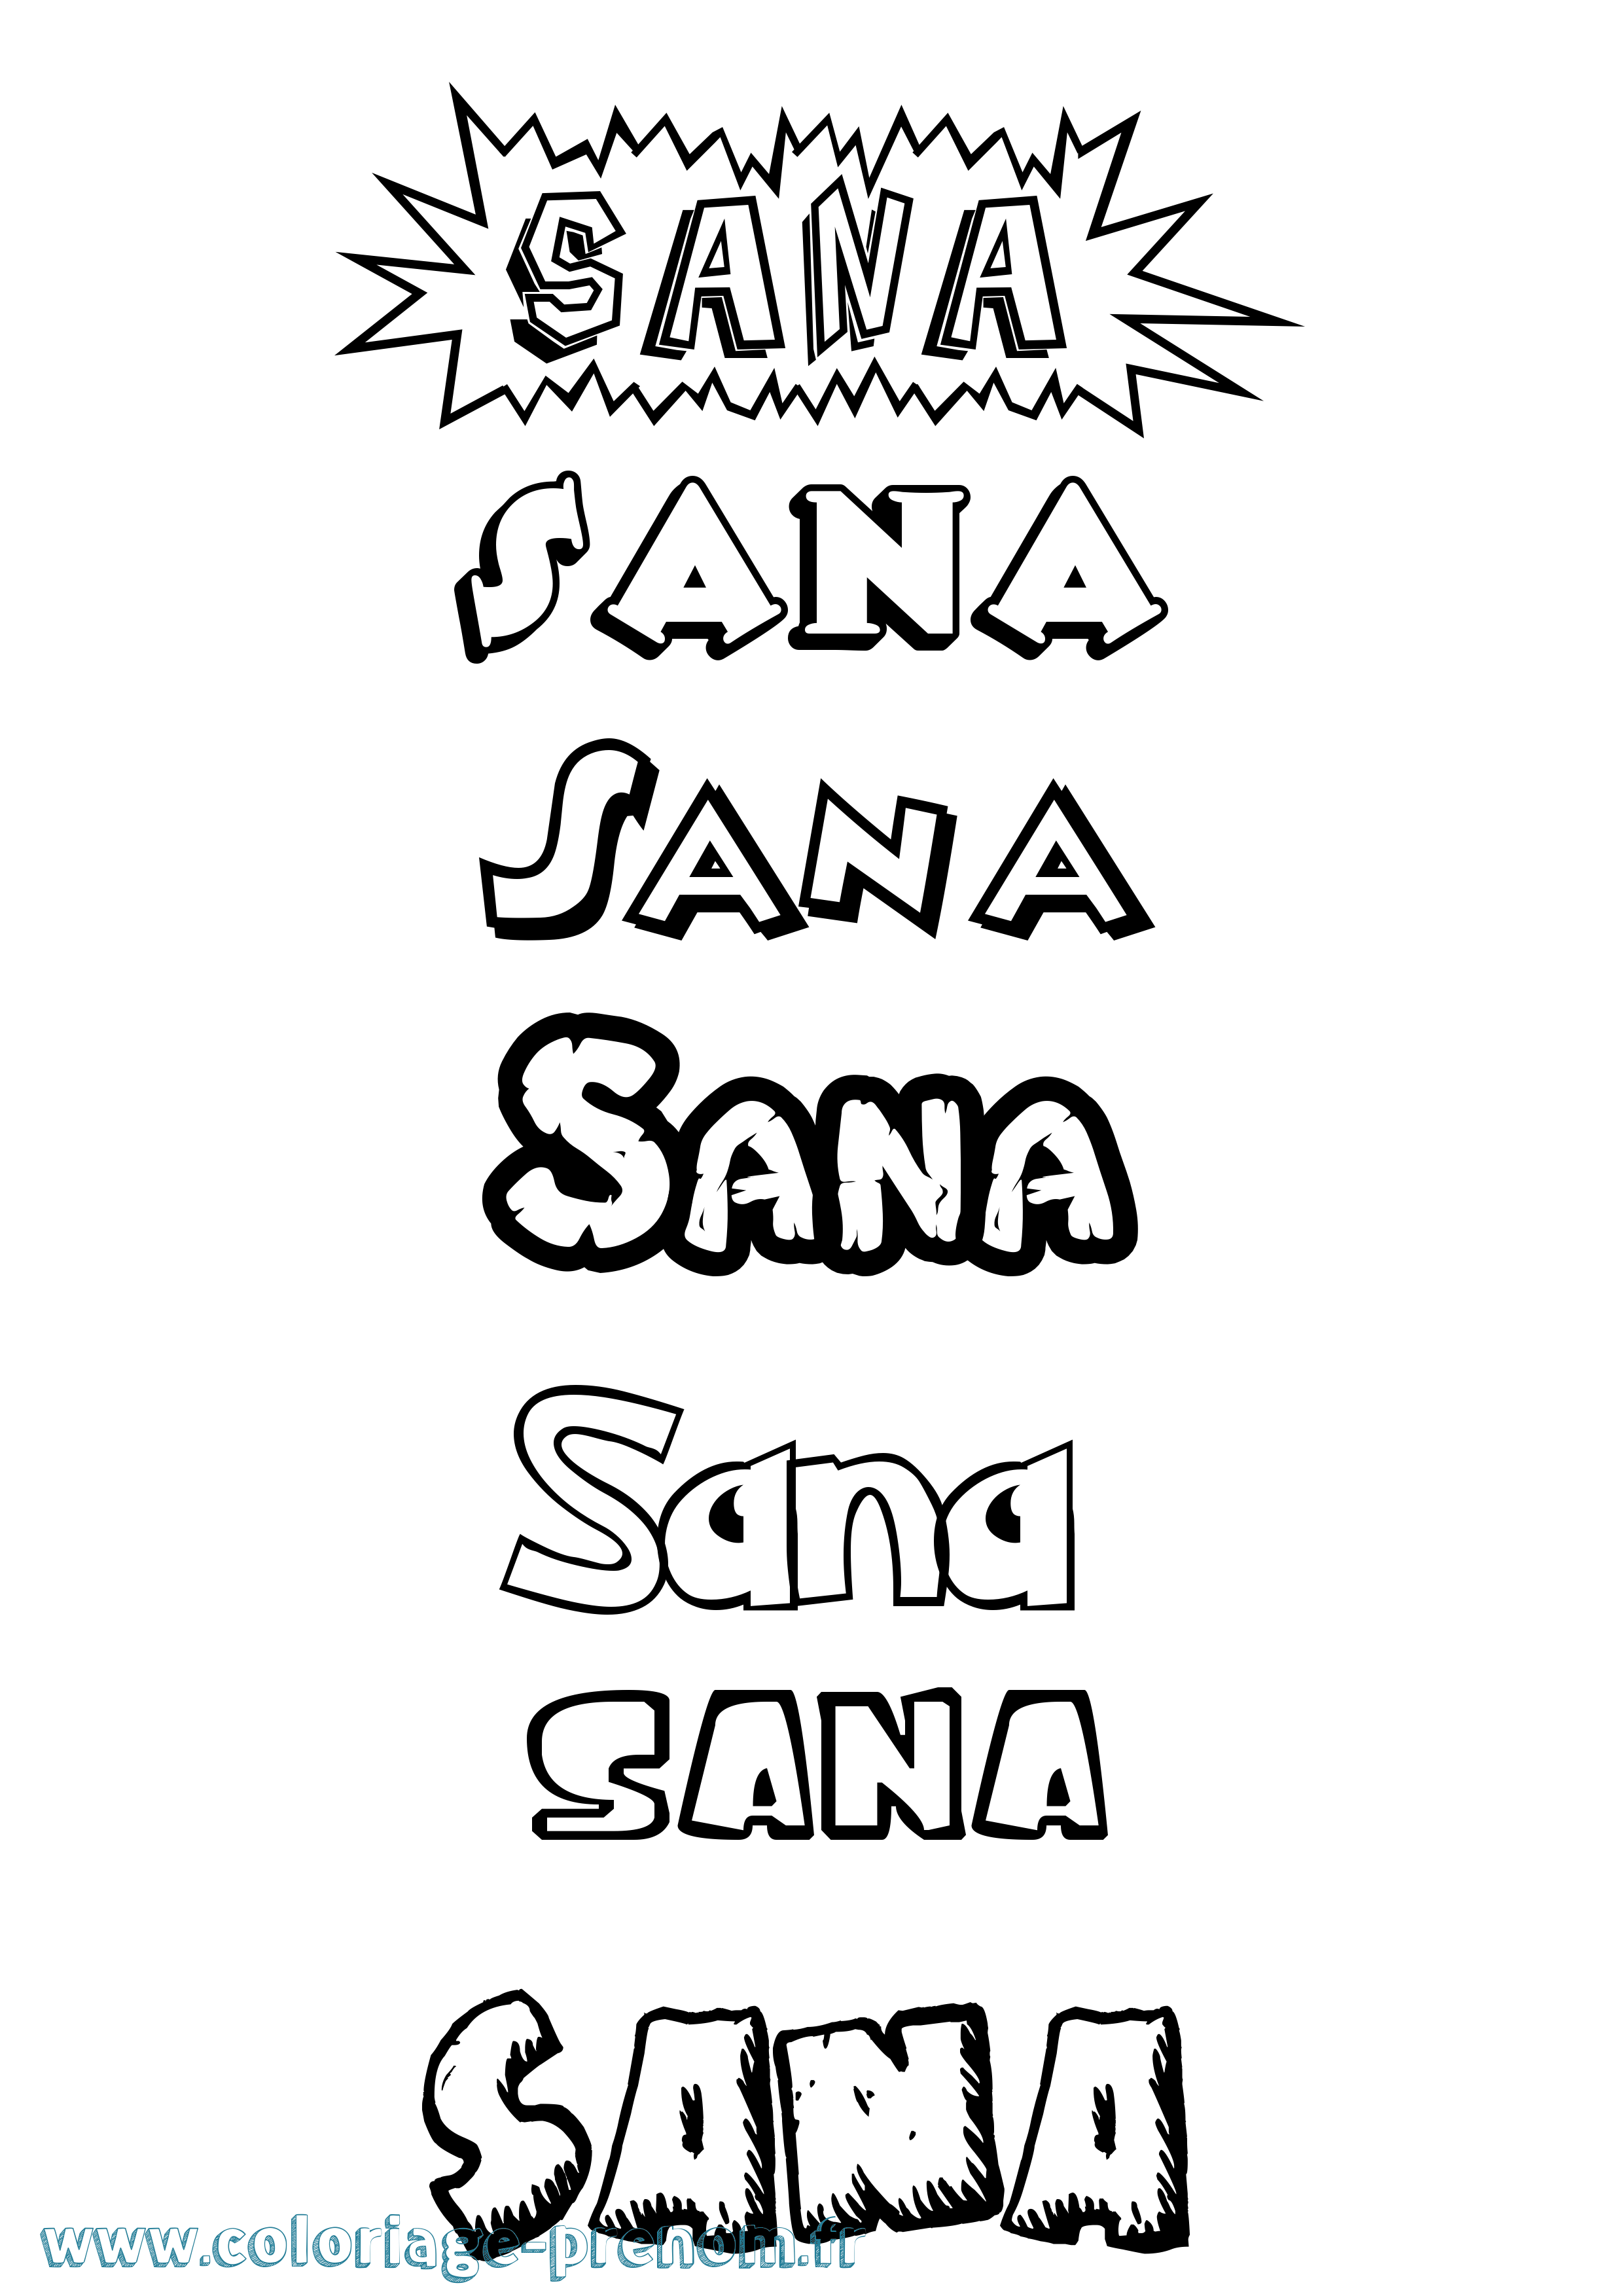 Coloriage prénom Sana